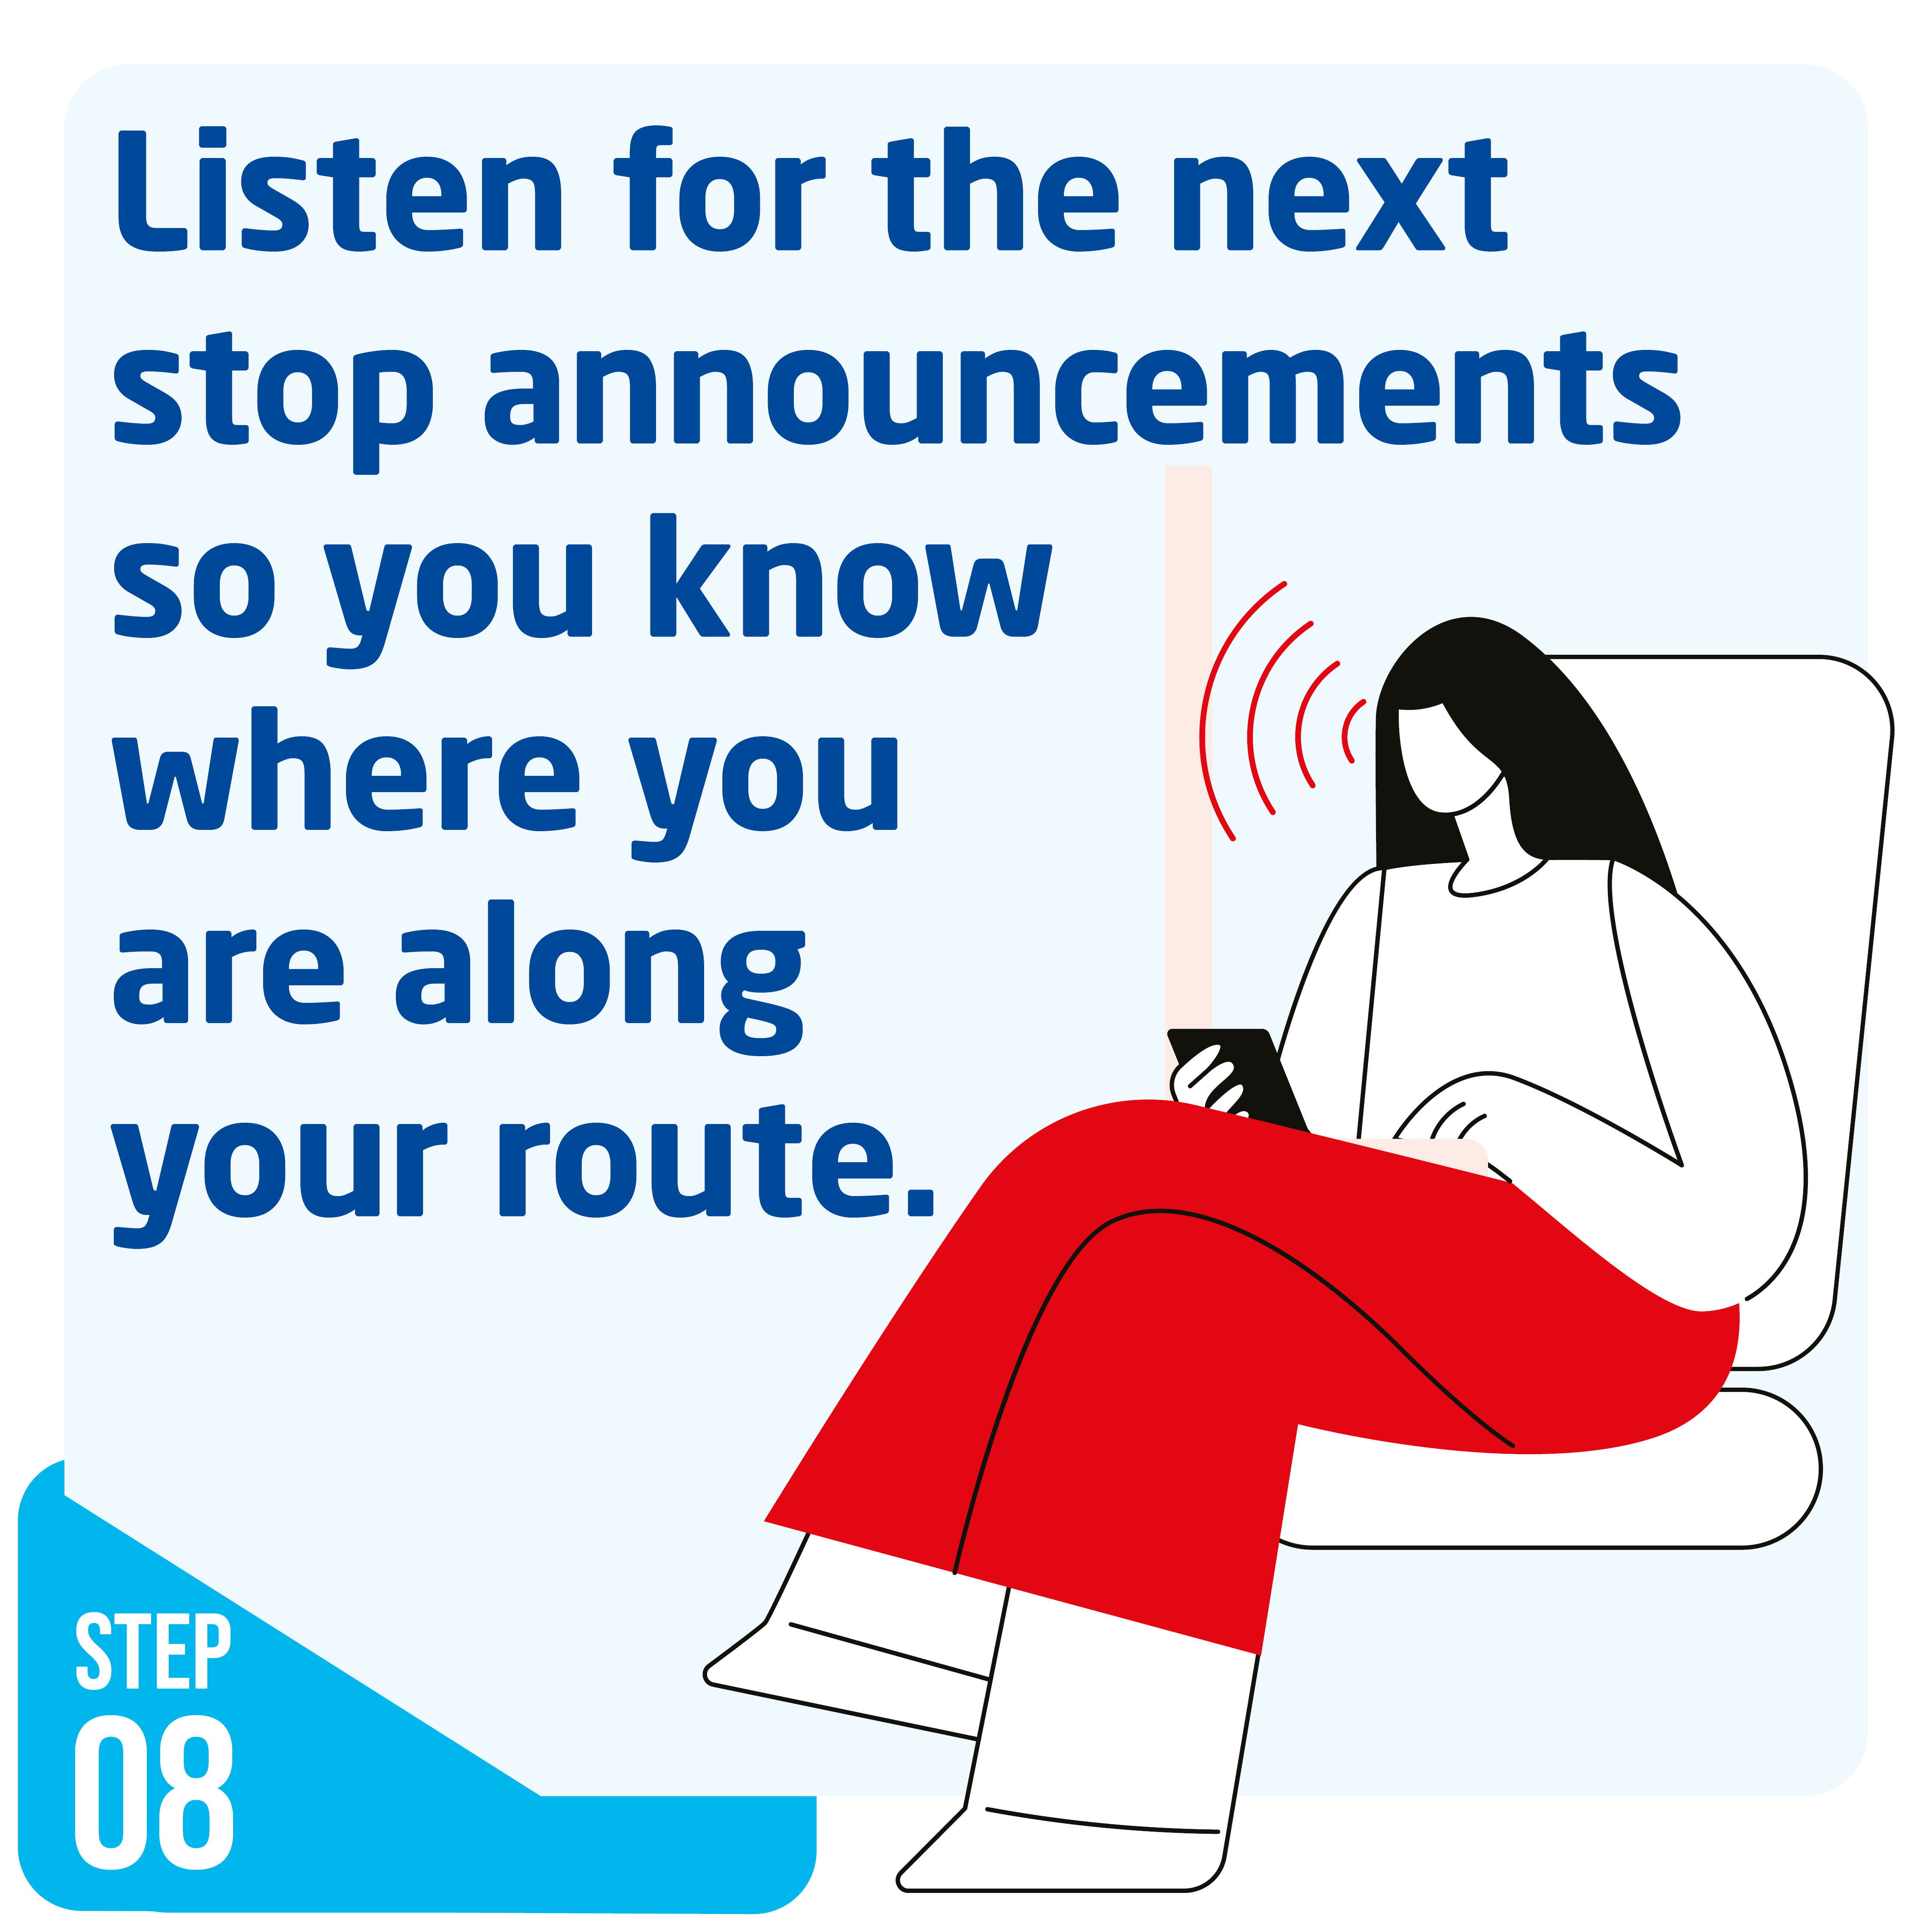 Listen out for next stop announcements